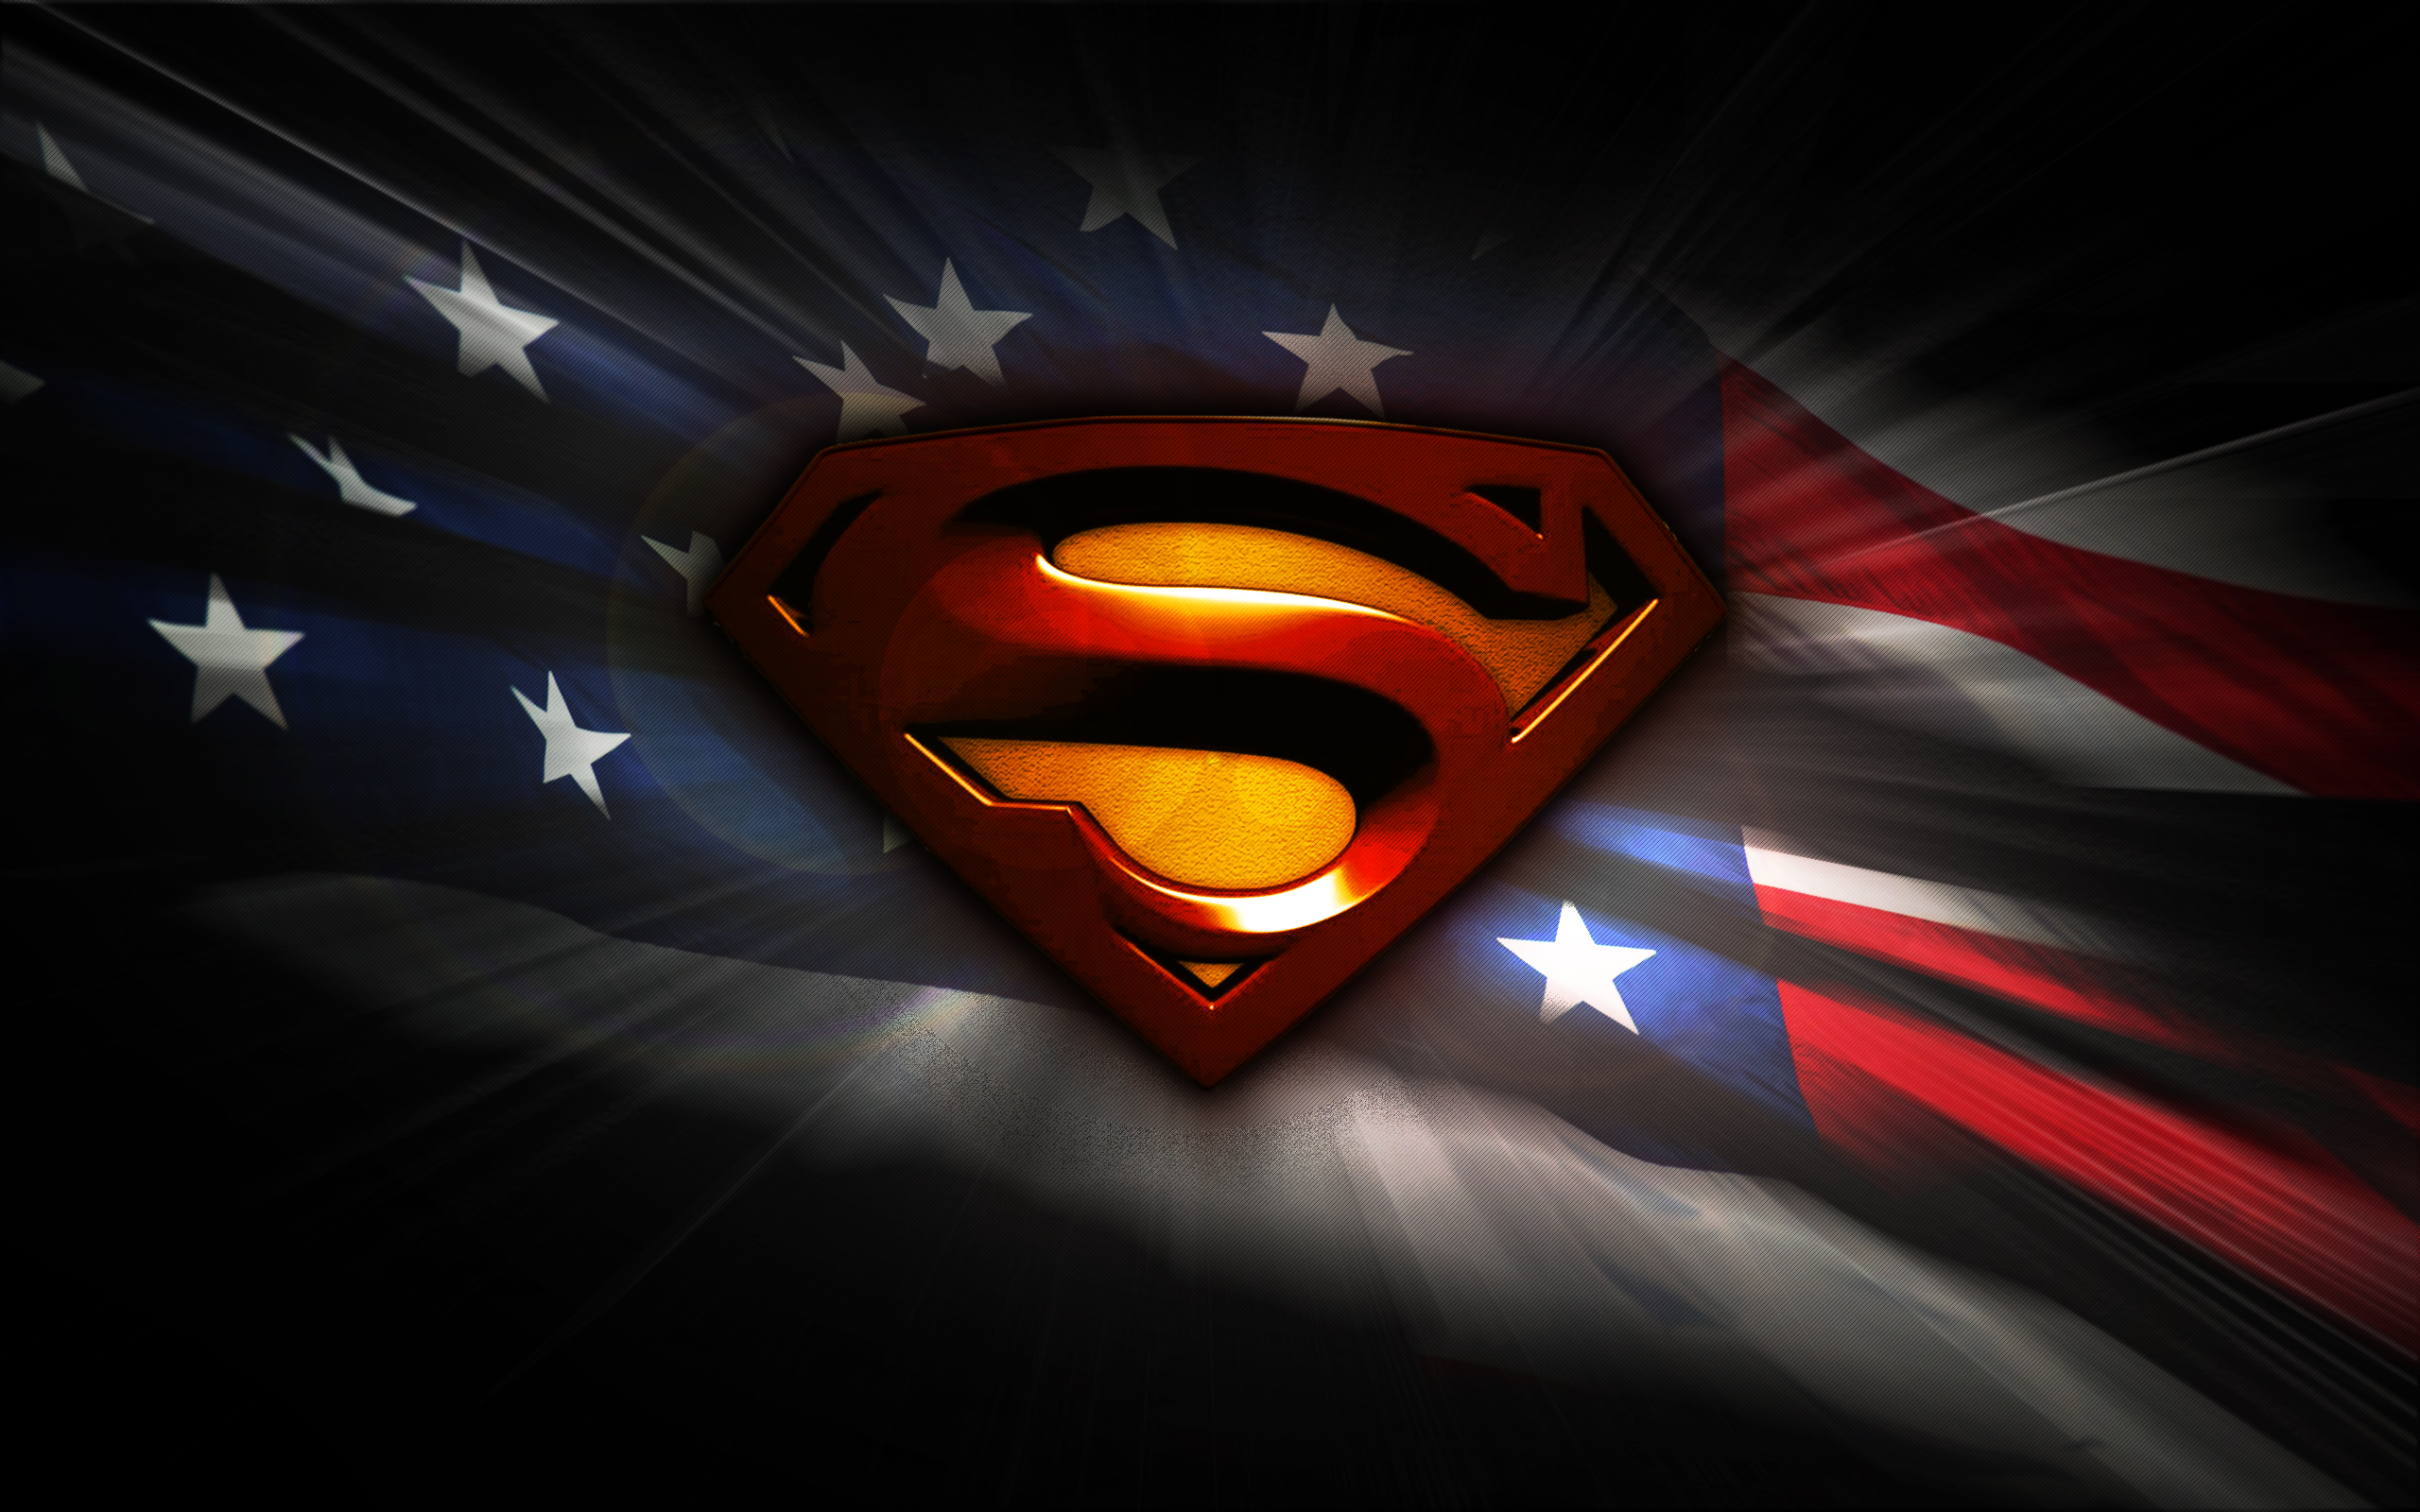 Superman american flag